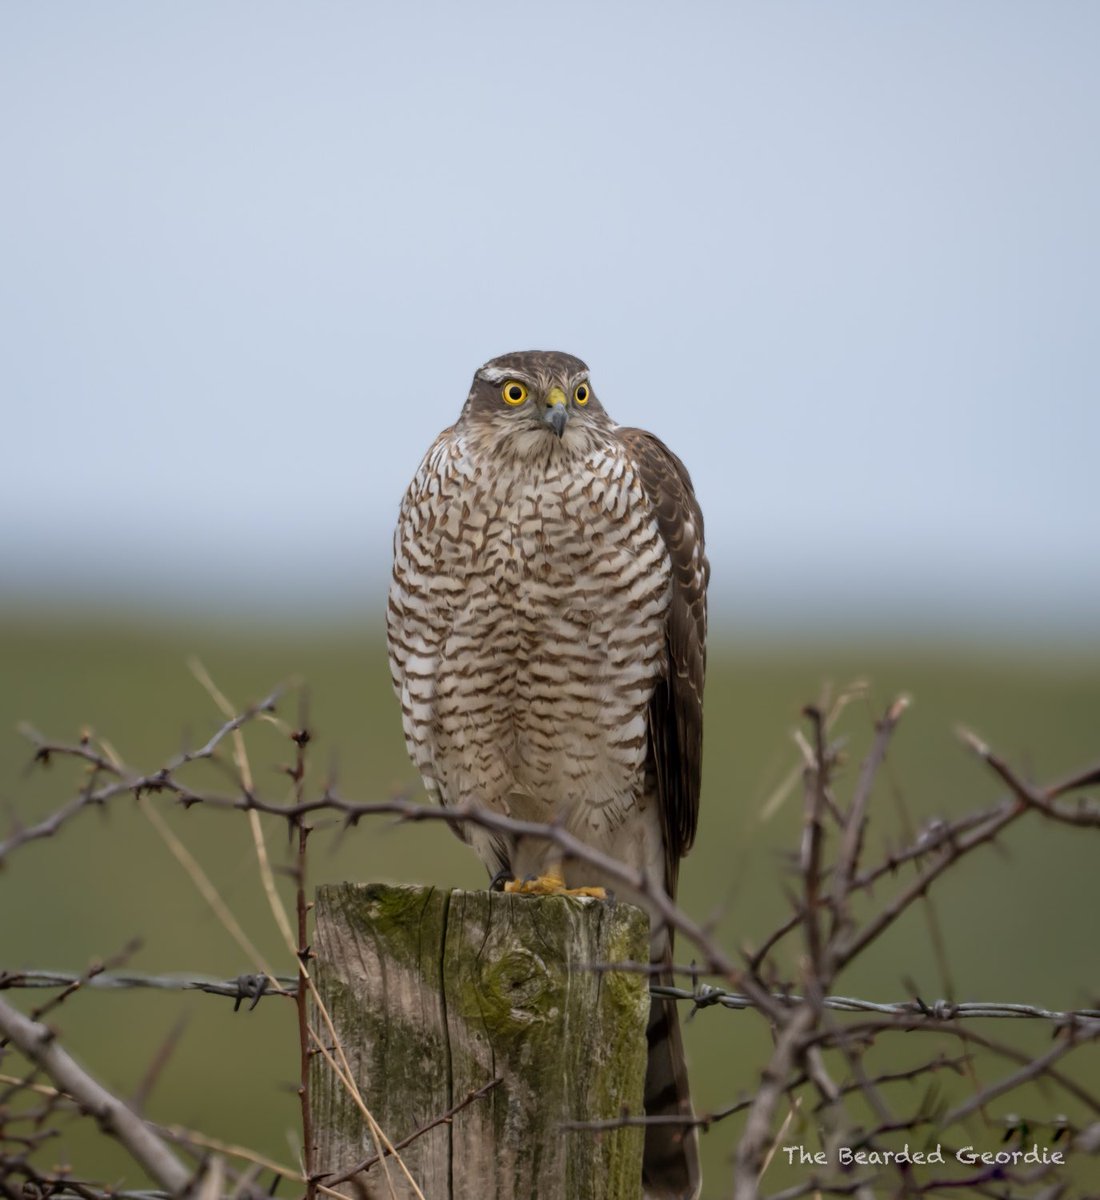 Sparrowhawk Burdon moor today and another crossbill in ousbrough woods 
@DurhamBirdClub 
@BBCSpringwatch 
@BirdGuides 
@britishbirds 
@RareBirdAlertUK 
@Natures_Voice 
@Britnatureguide
#BirdsSeenIn2024